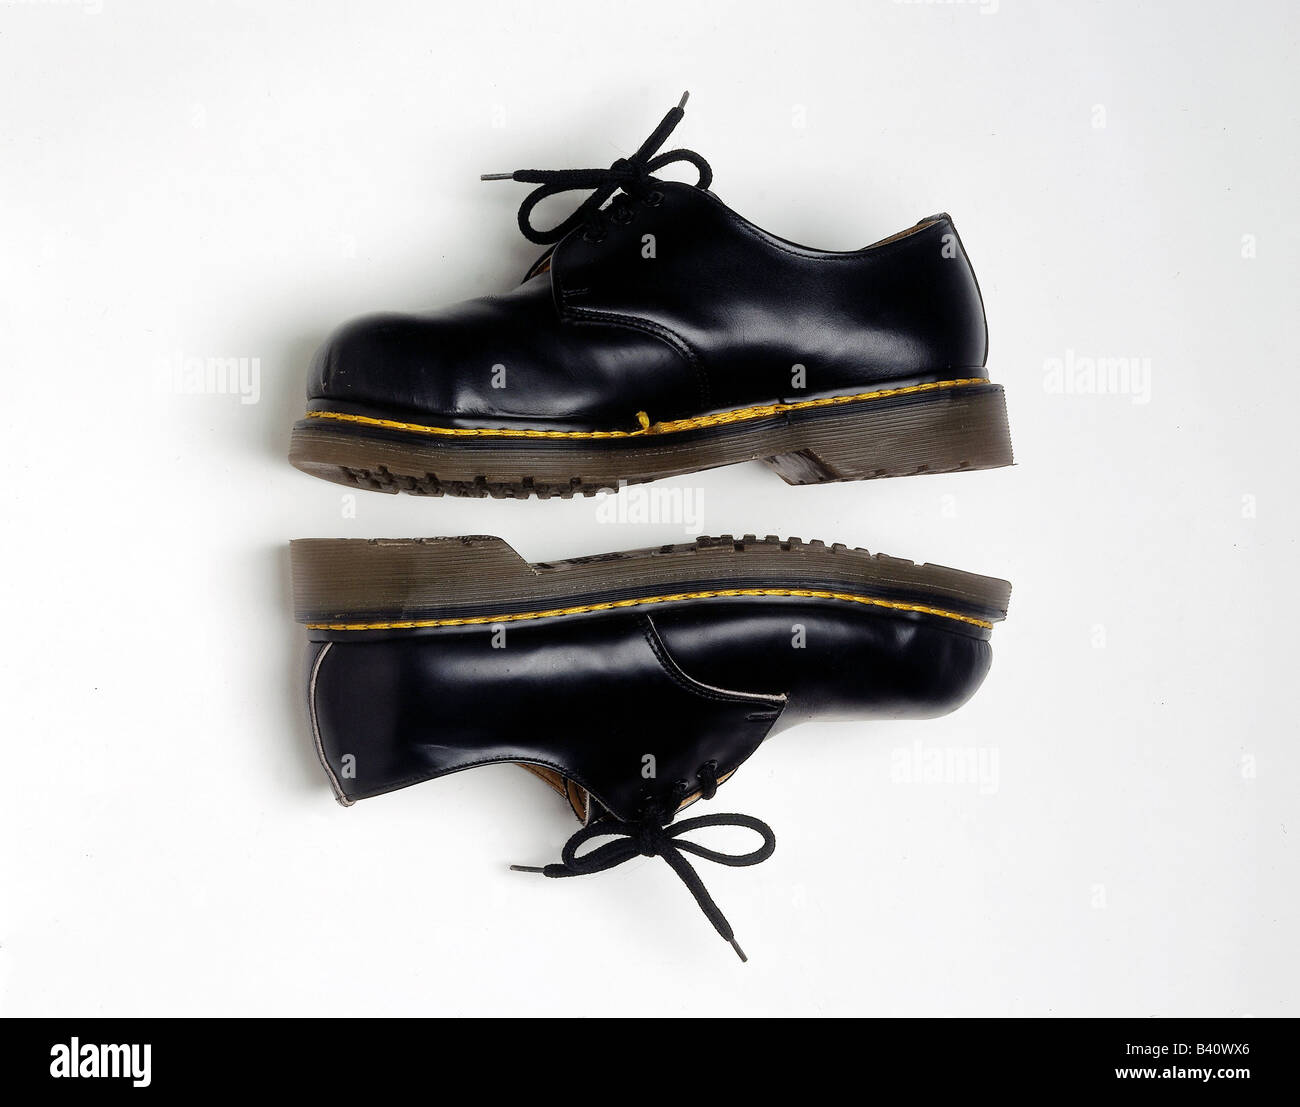 Mode, Schuhe, paar schwarze Doc Martens, Sicherheitsschuhe mit Stahlkappe  Kappe, Schuh Stockfotografie - Alamy